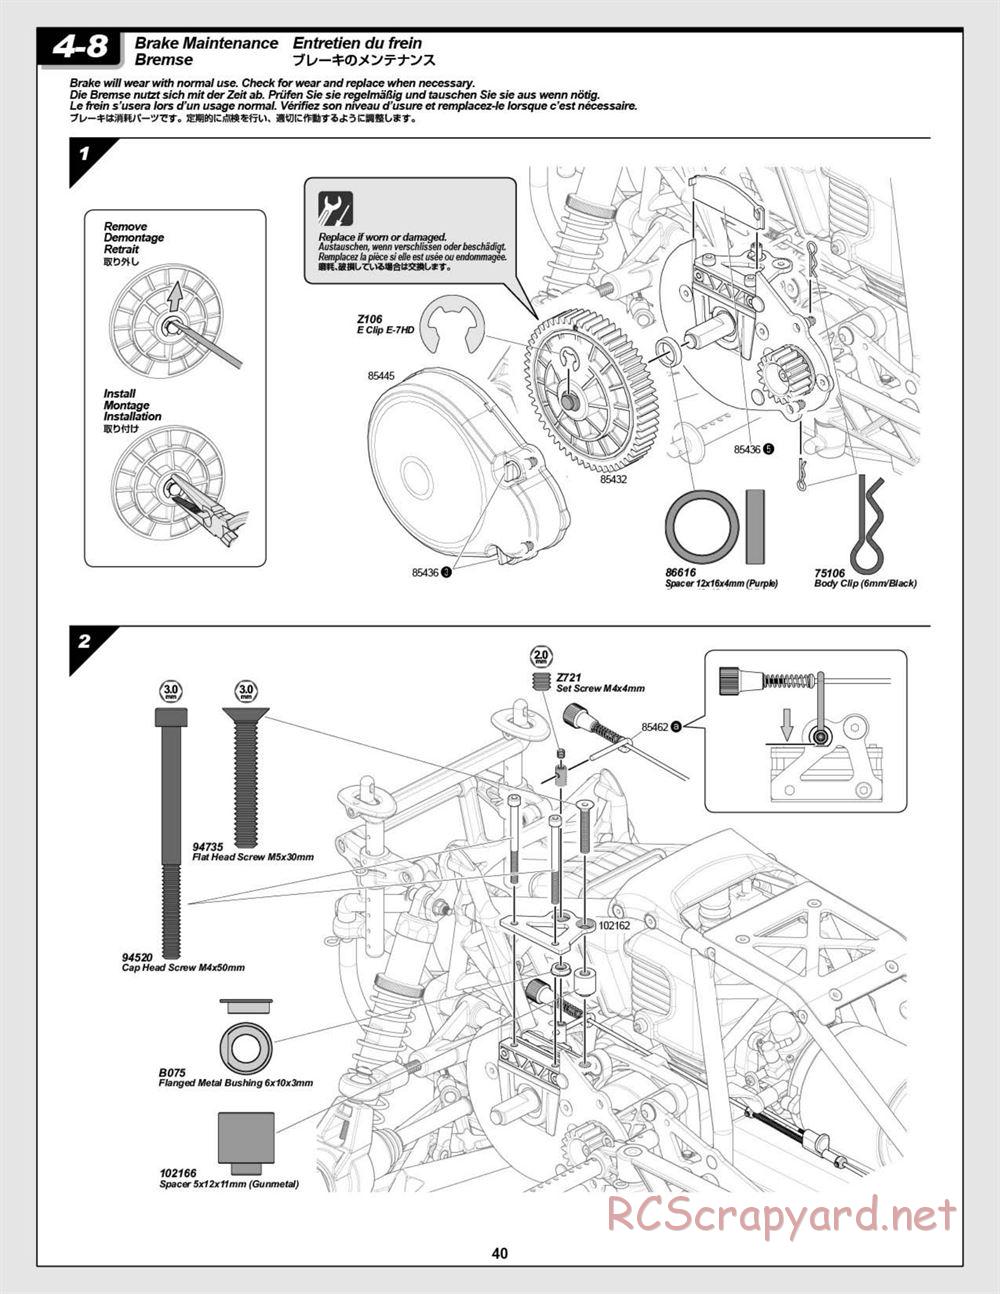 HPI - Baja 5R - Manual - Page 40